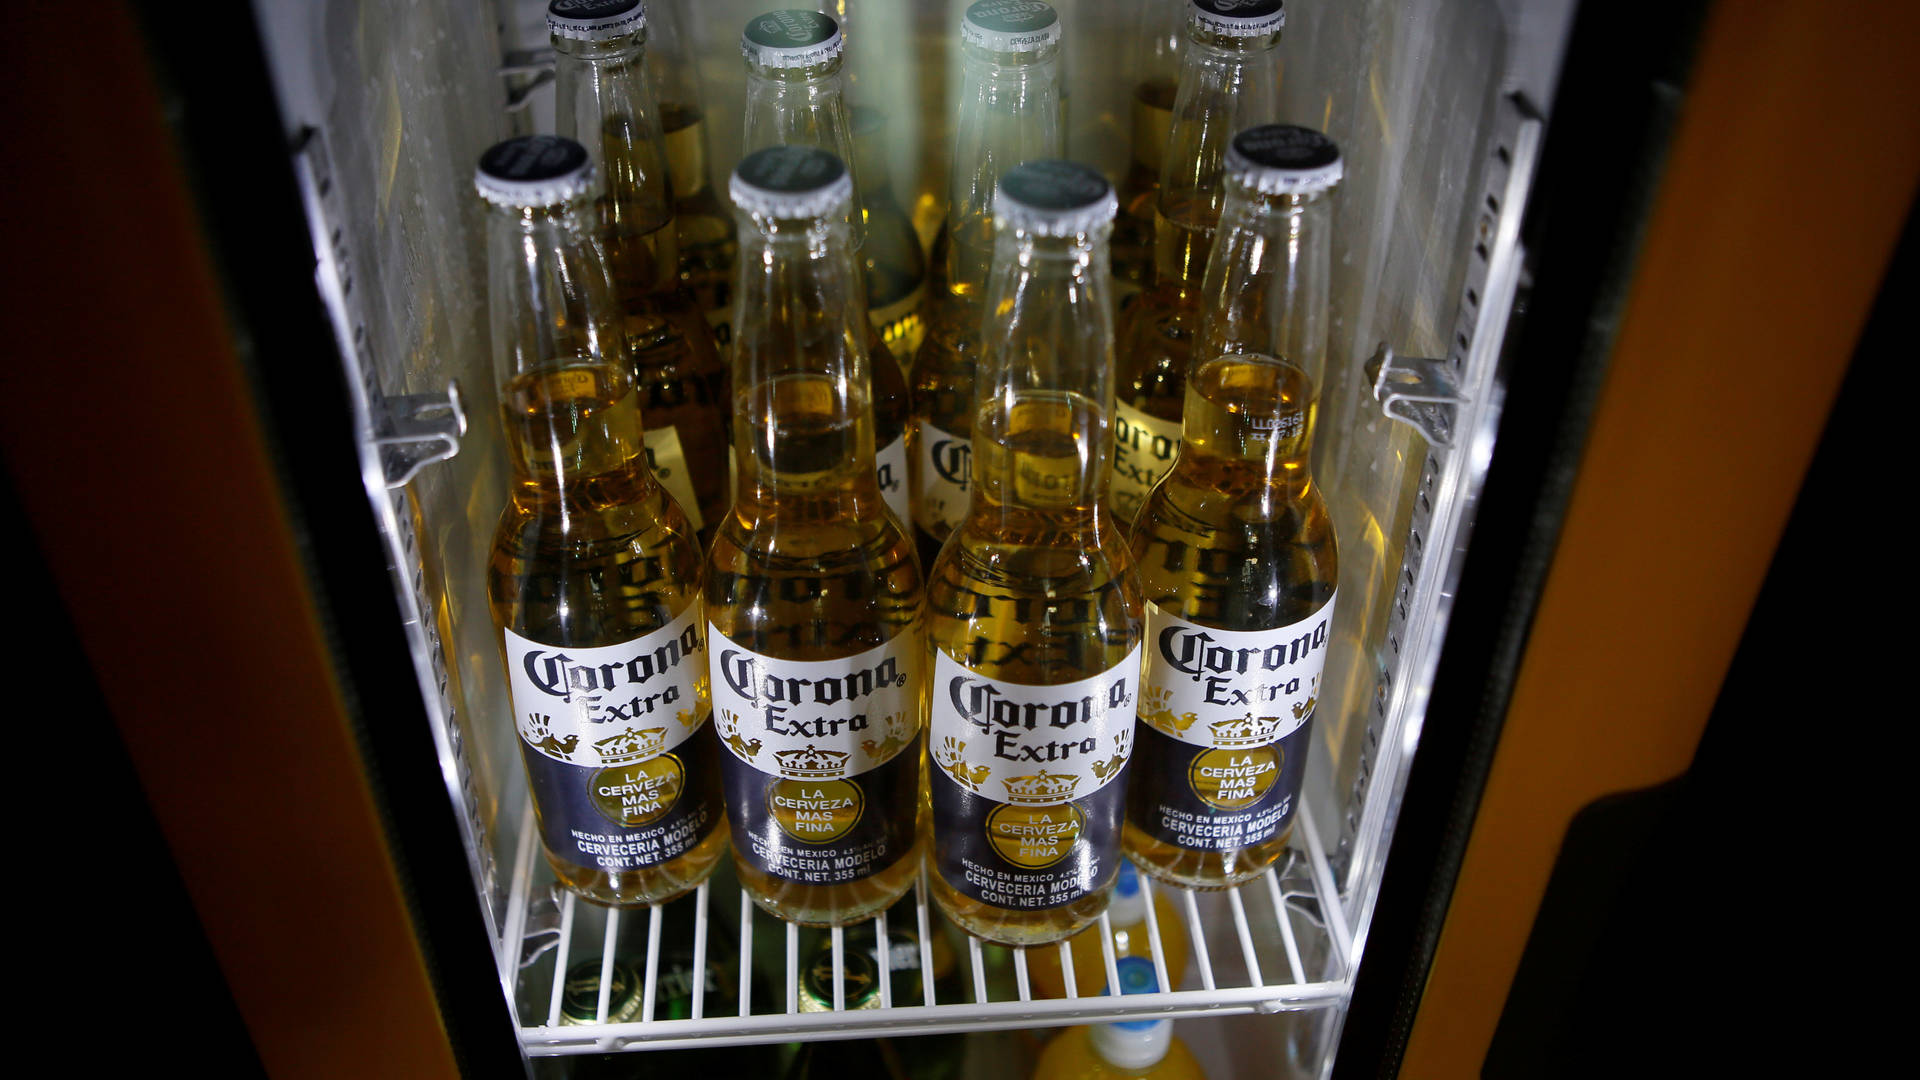 Coronaextra Bier Im Kühlschrank Wallpaper